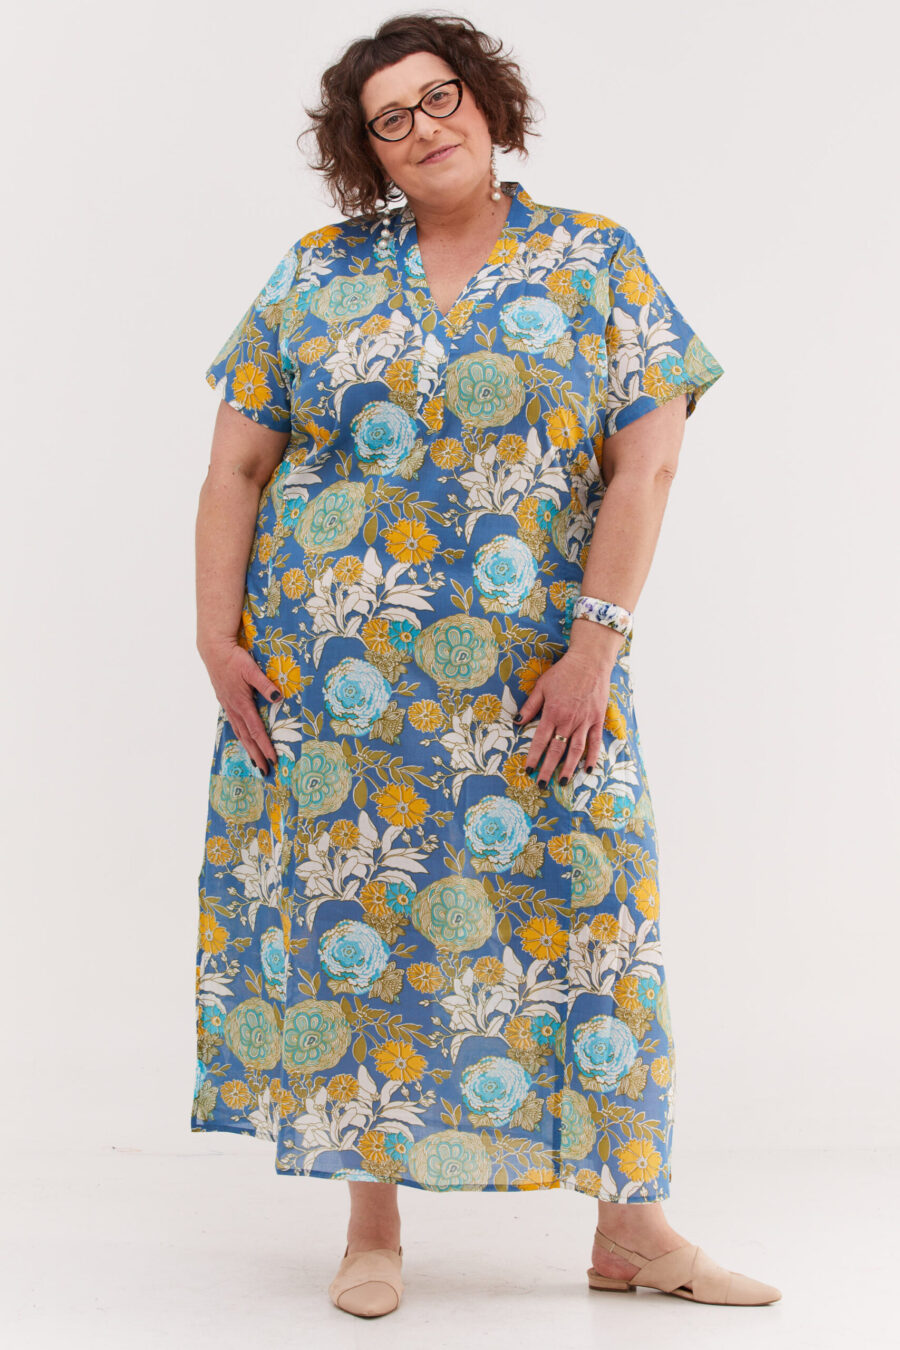 Jalabiya dress | Uniquely designed dress - Blue blossom, colorful floral print on a blue dress by comfort zone boutique